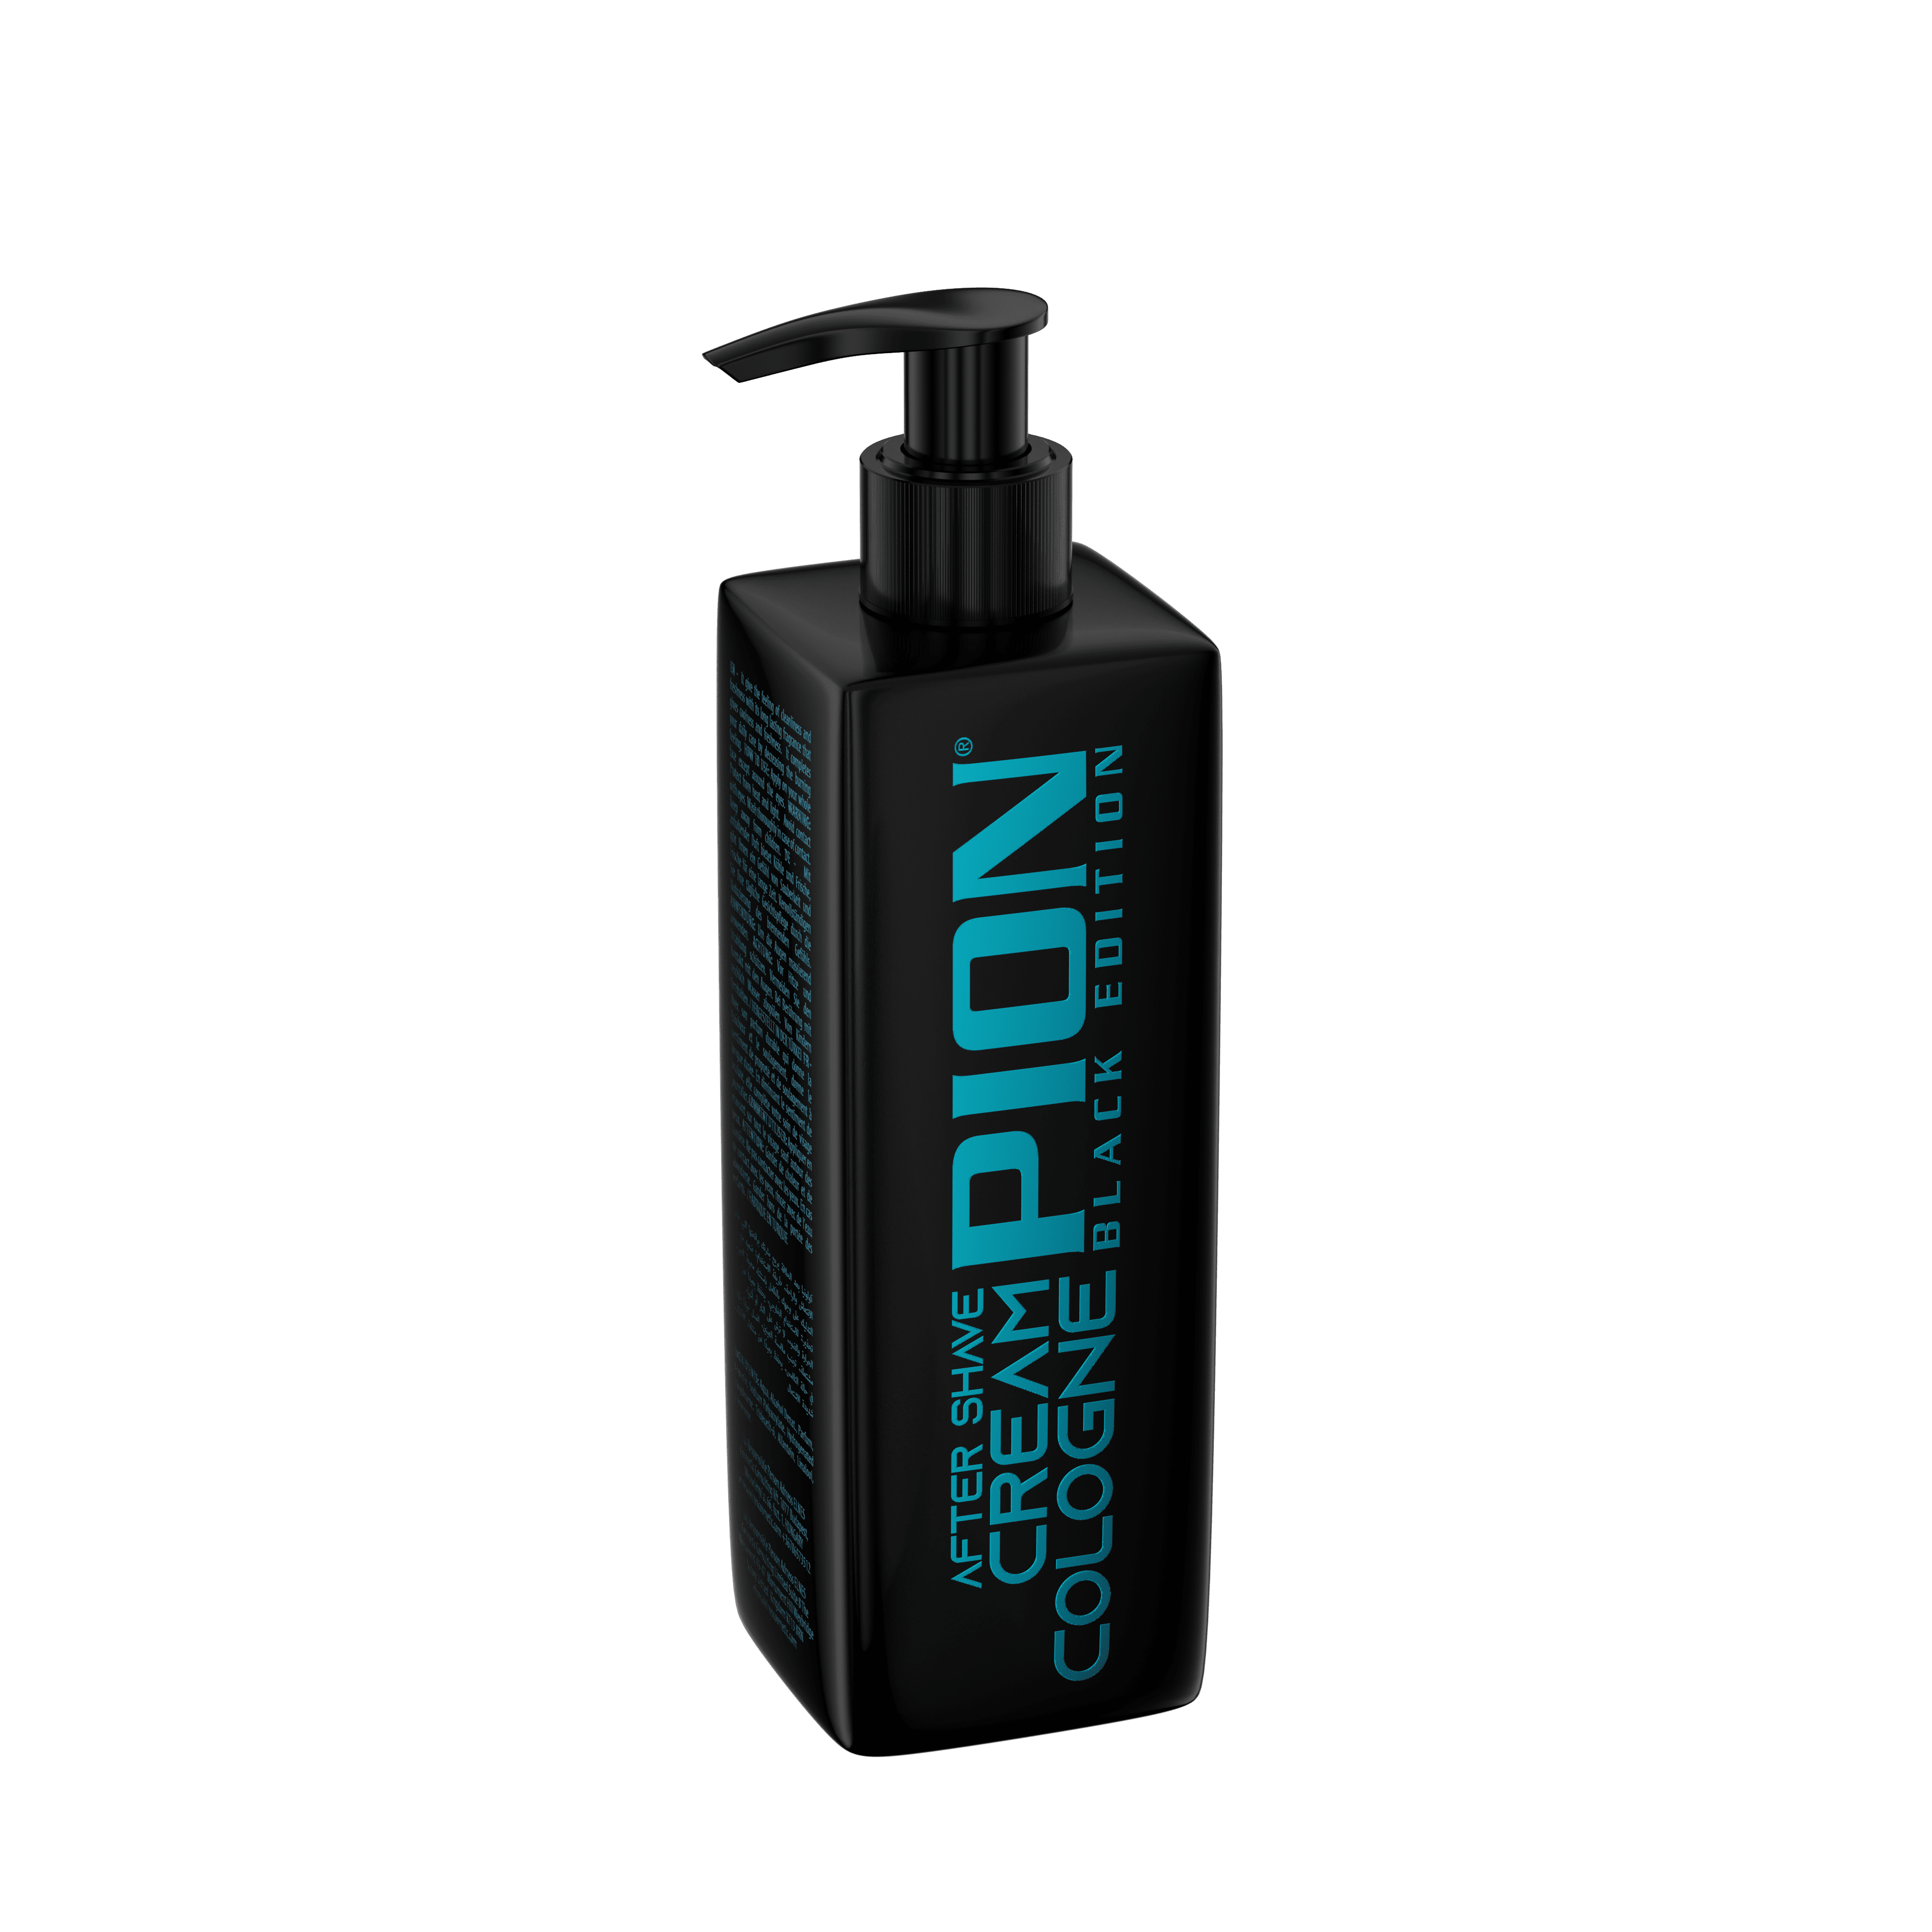 Pion Cream Cologne Turquoise 370 - PION BLACK EDITION